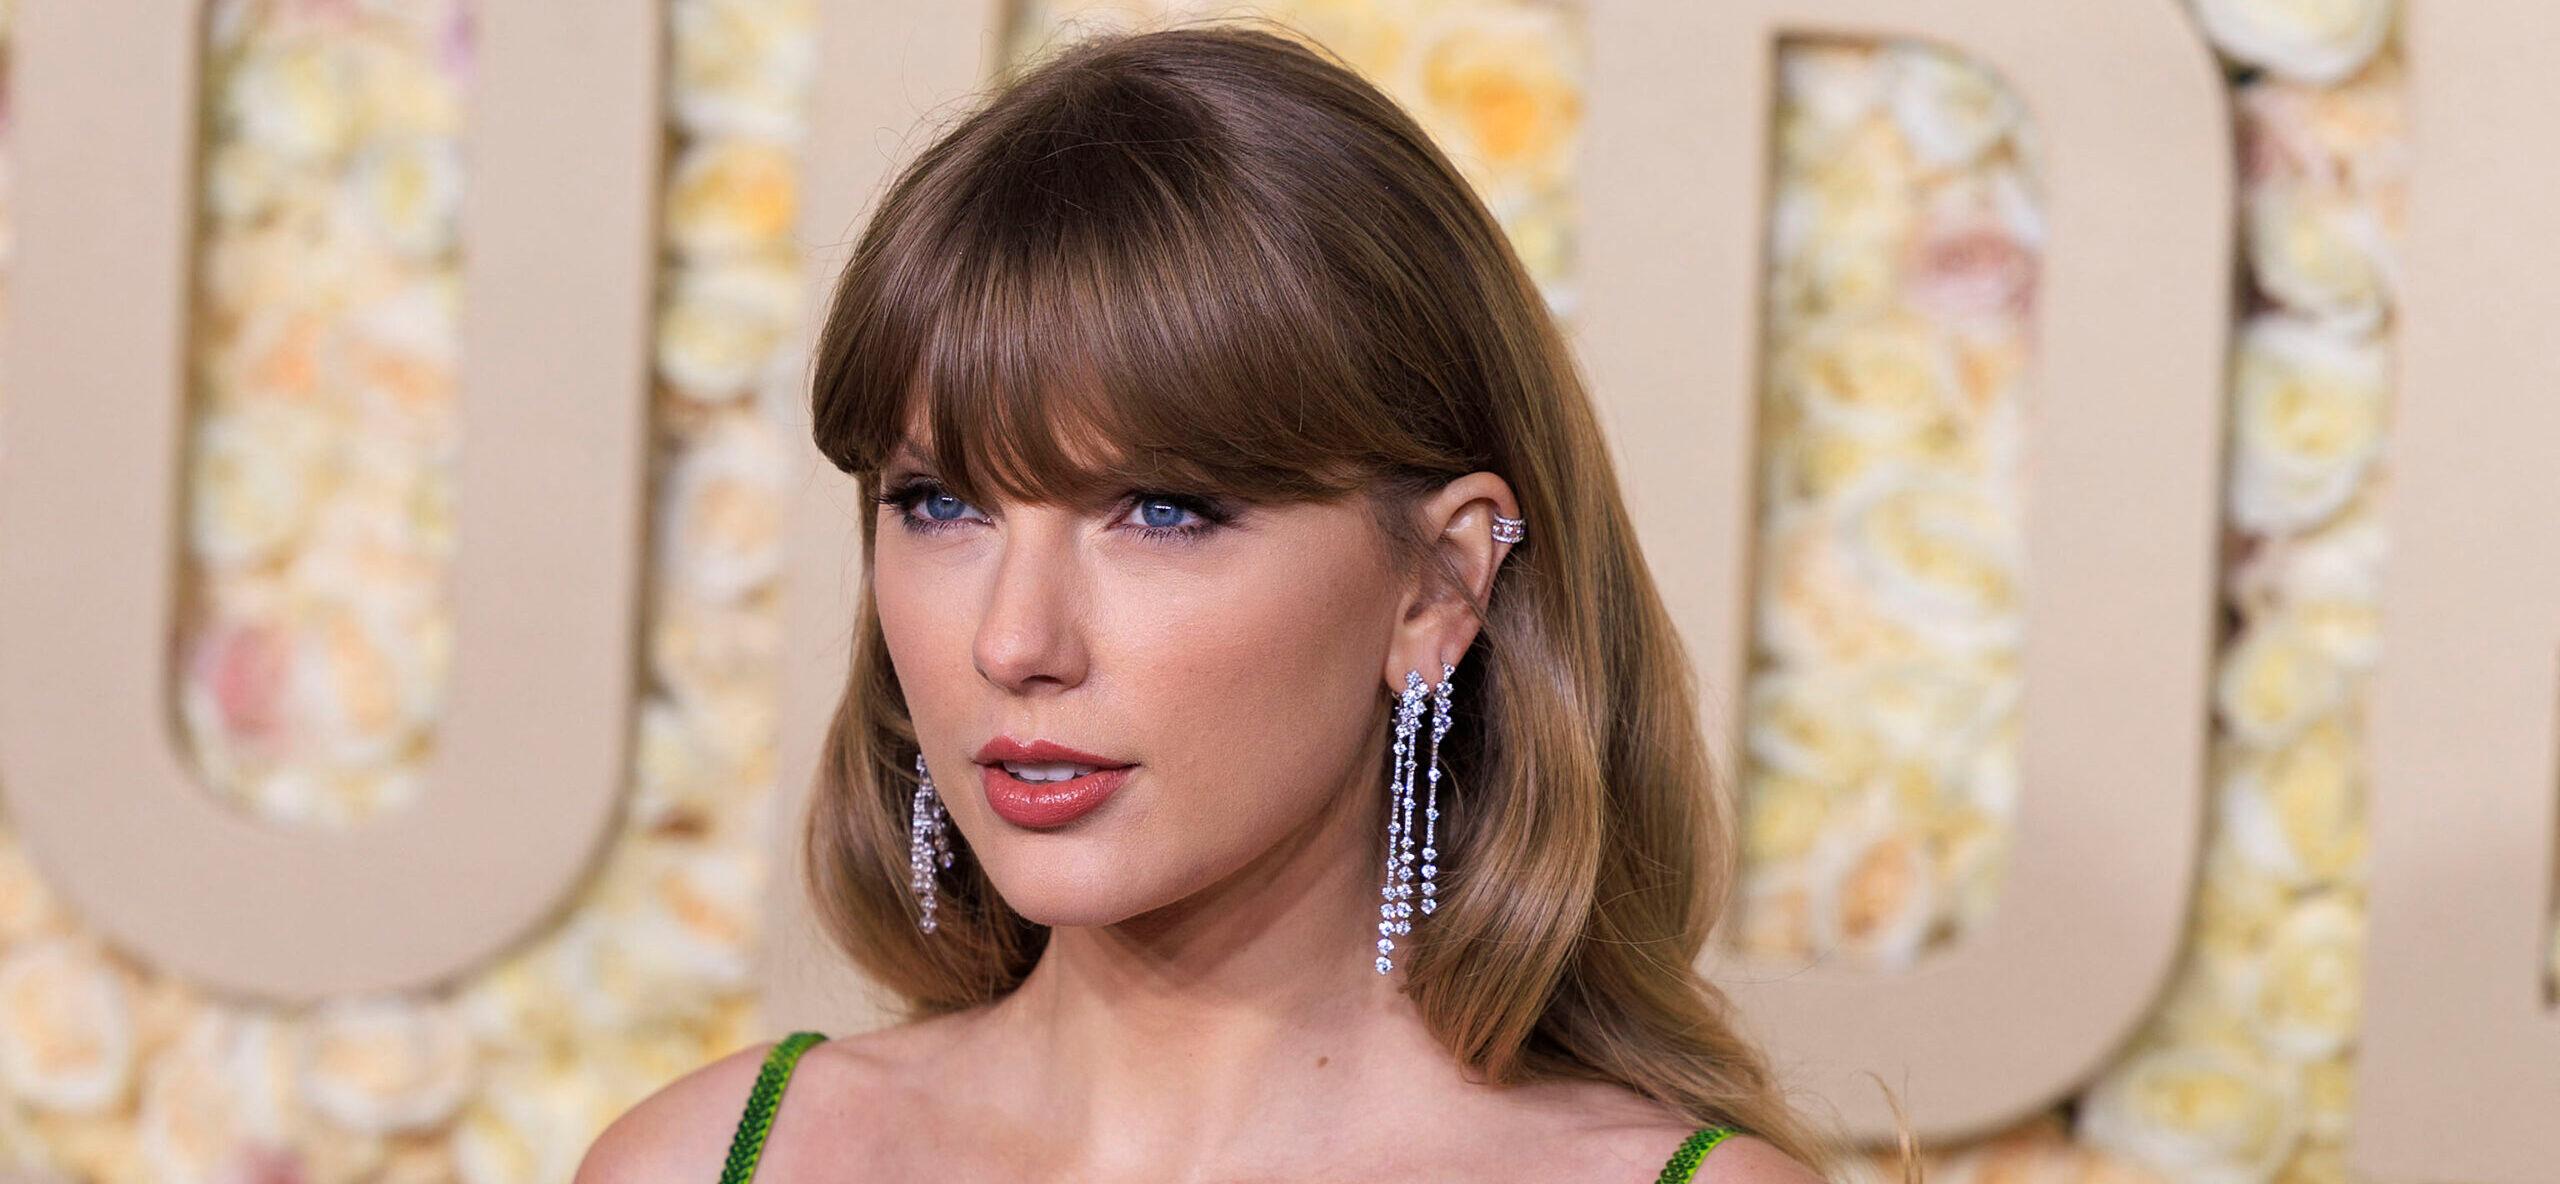 Taylor Swift Receives Backlash For ‘Taking Shots’ At Super Bowl [VIDEO]